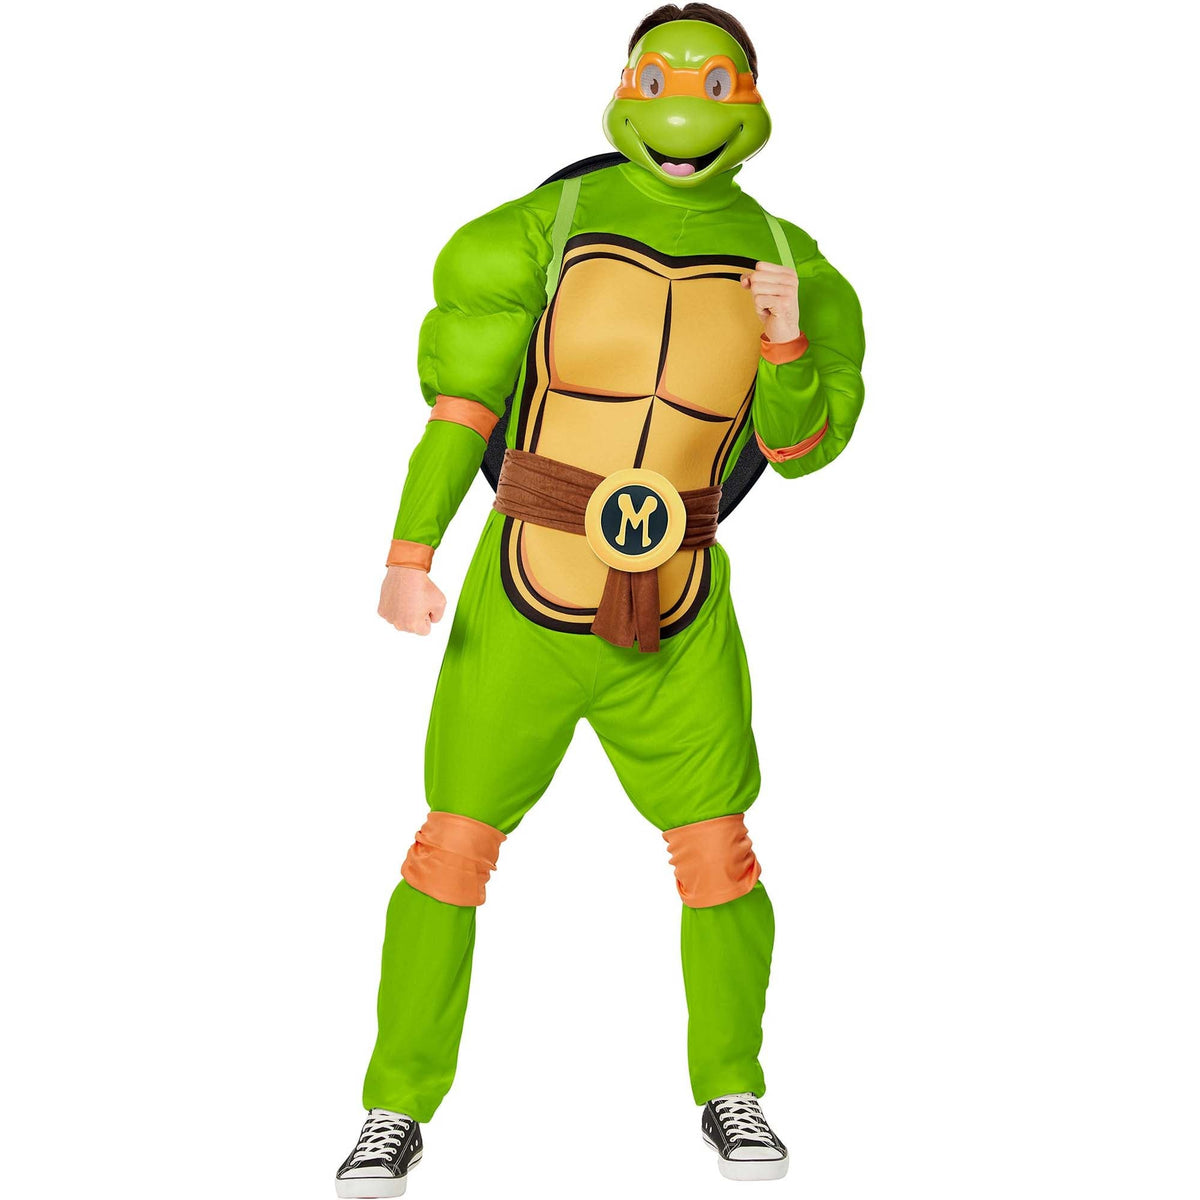 IN SPIRIT DESIGNS Costumes Teenage Mutant Ninja Turtles Michelangelo Deluxe Costume for Adults